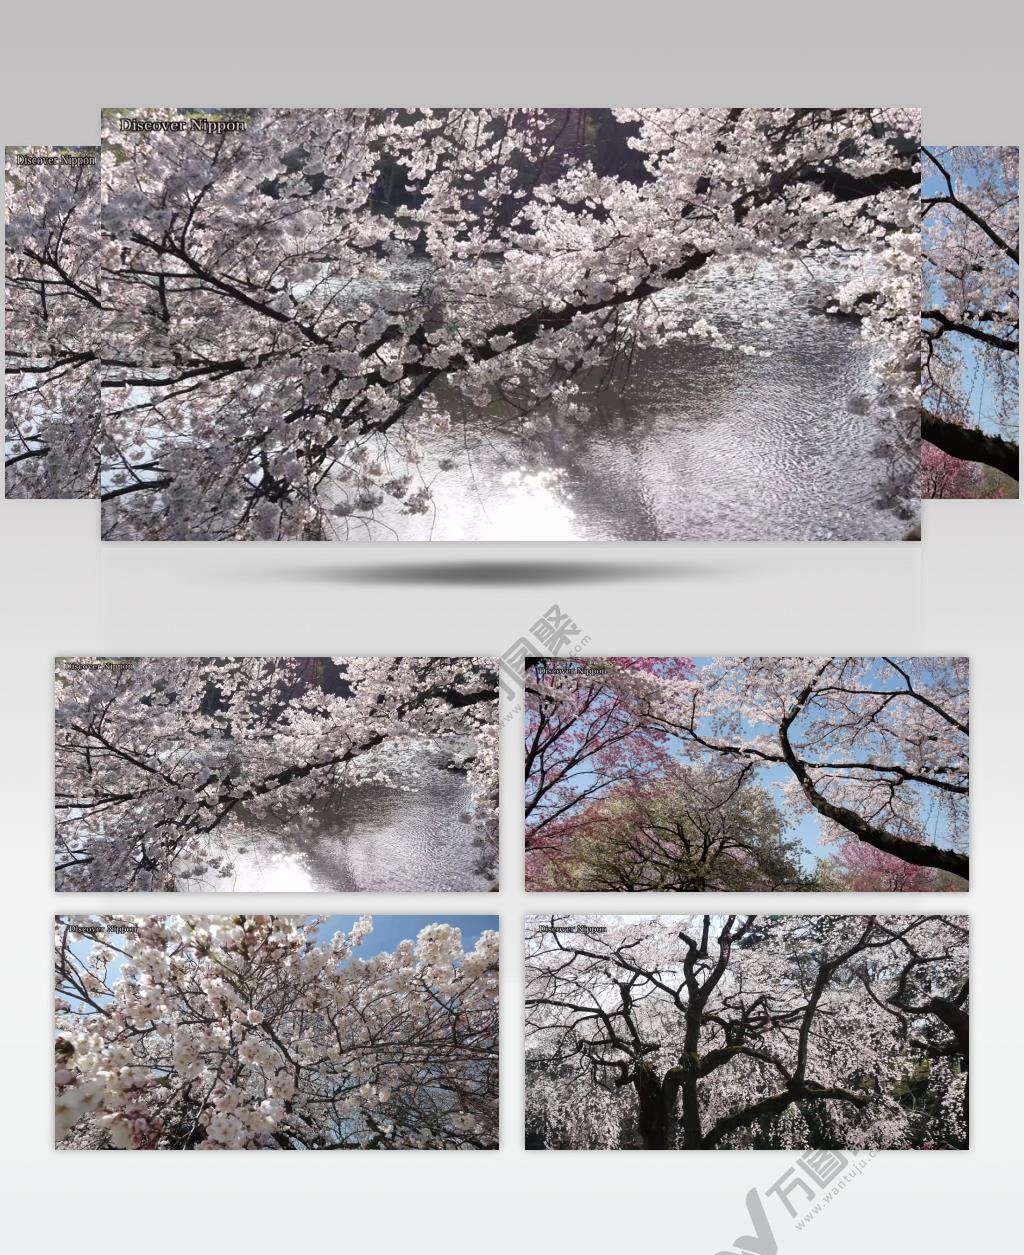 ［4K］ 日本樱花 4K片源 超高清实拍视频素材 自然风景山水花草树木瀑布超清素材